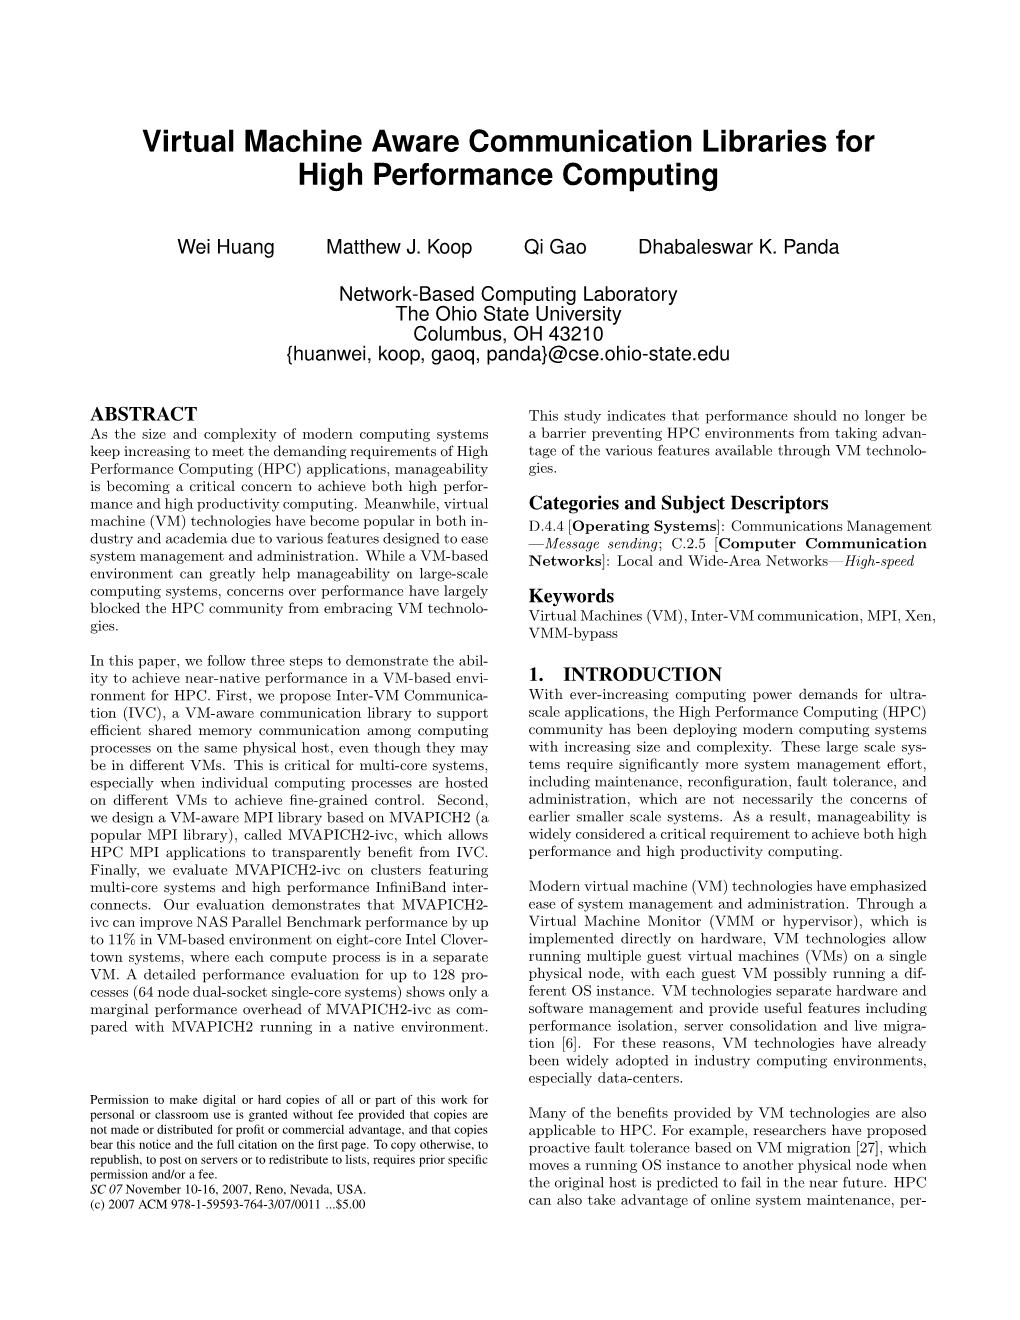 Virtual Machine Aware Communication Libraries for High Performance Computing